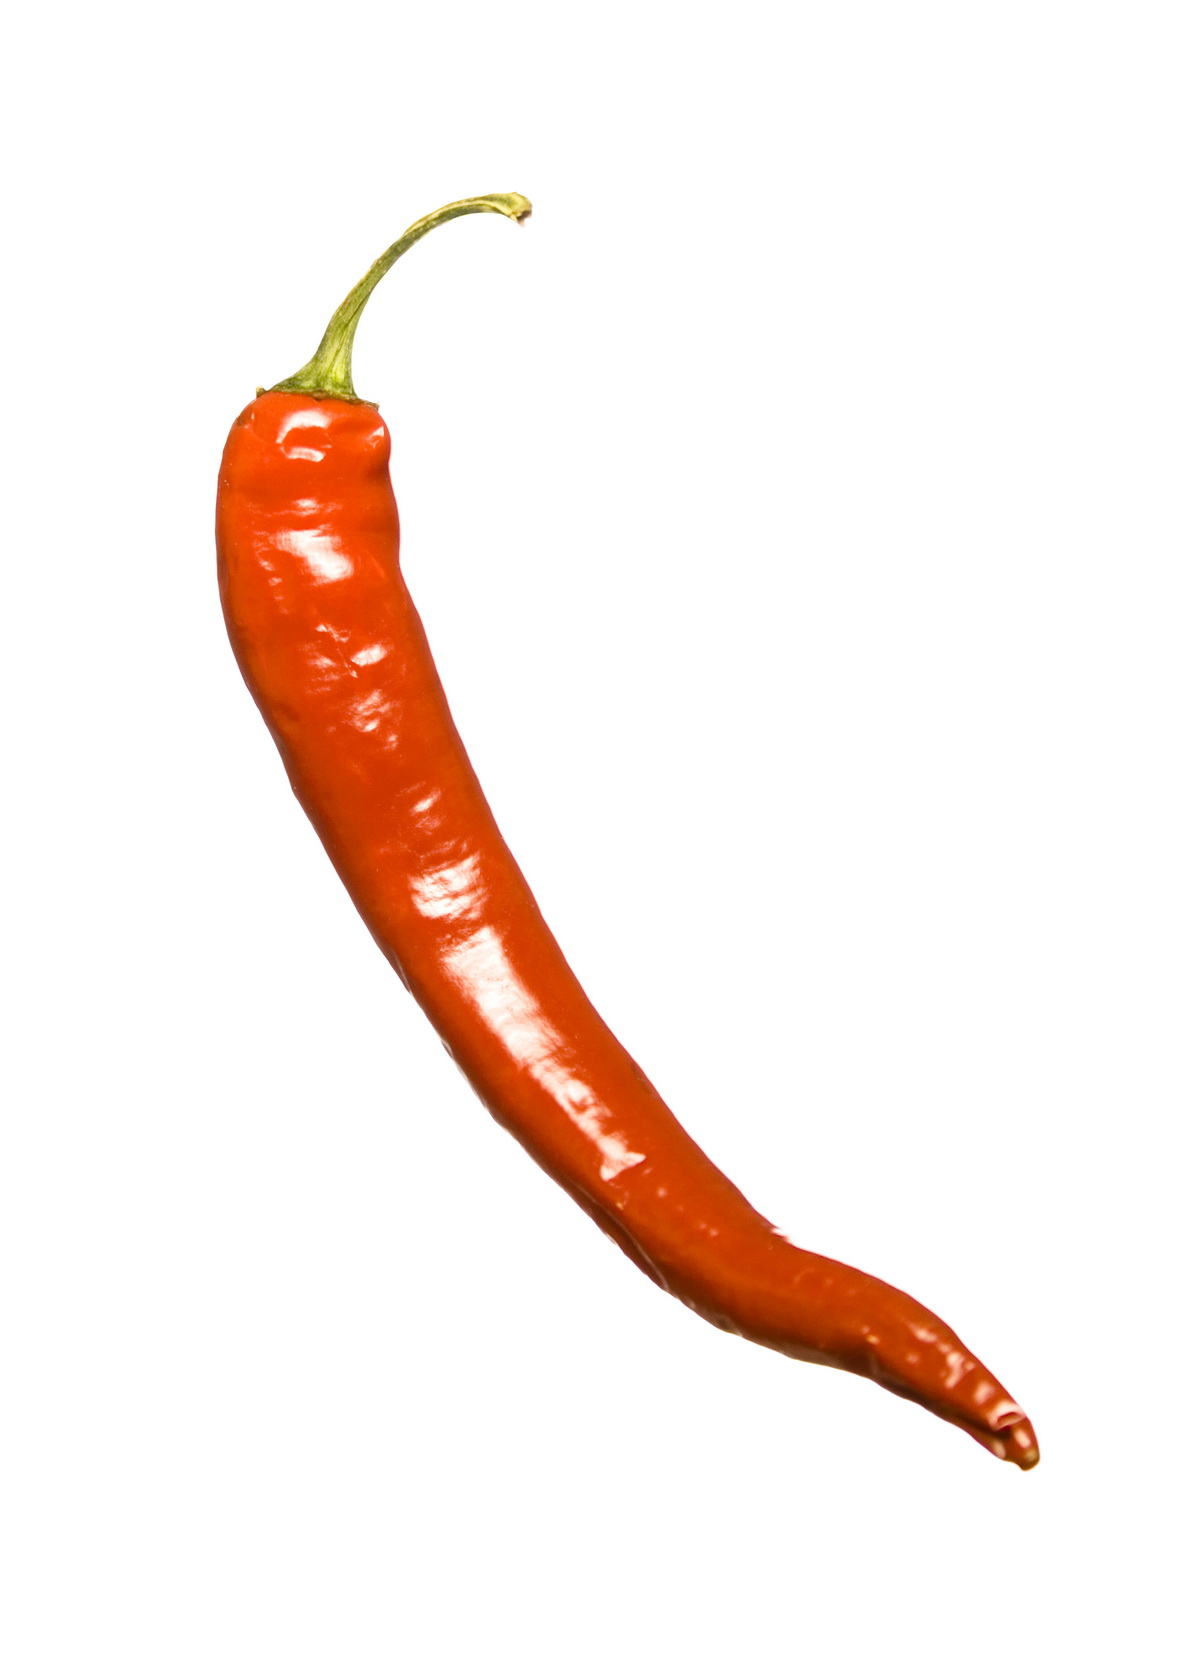 Red hot chilli pepper photo